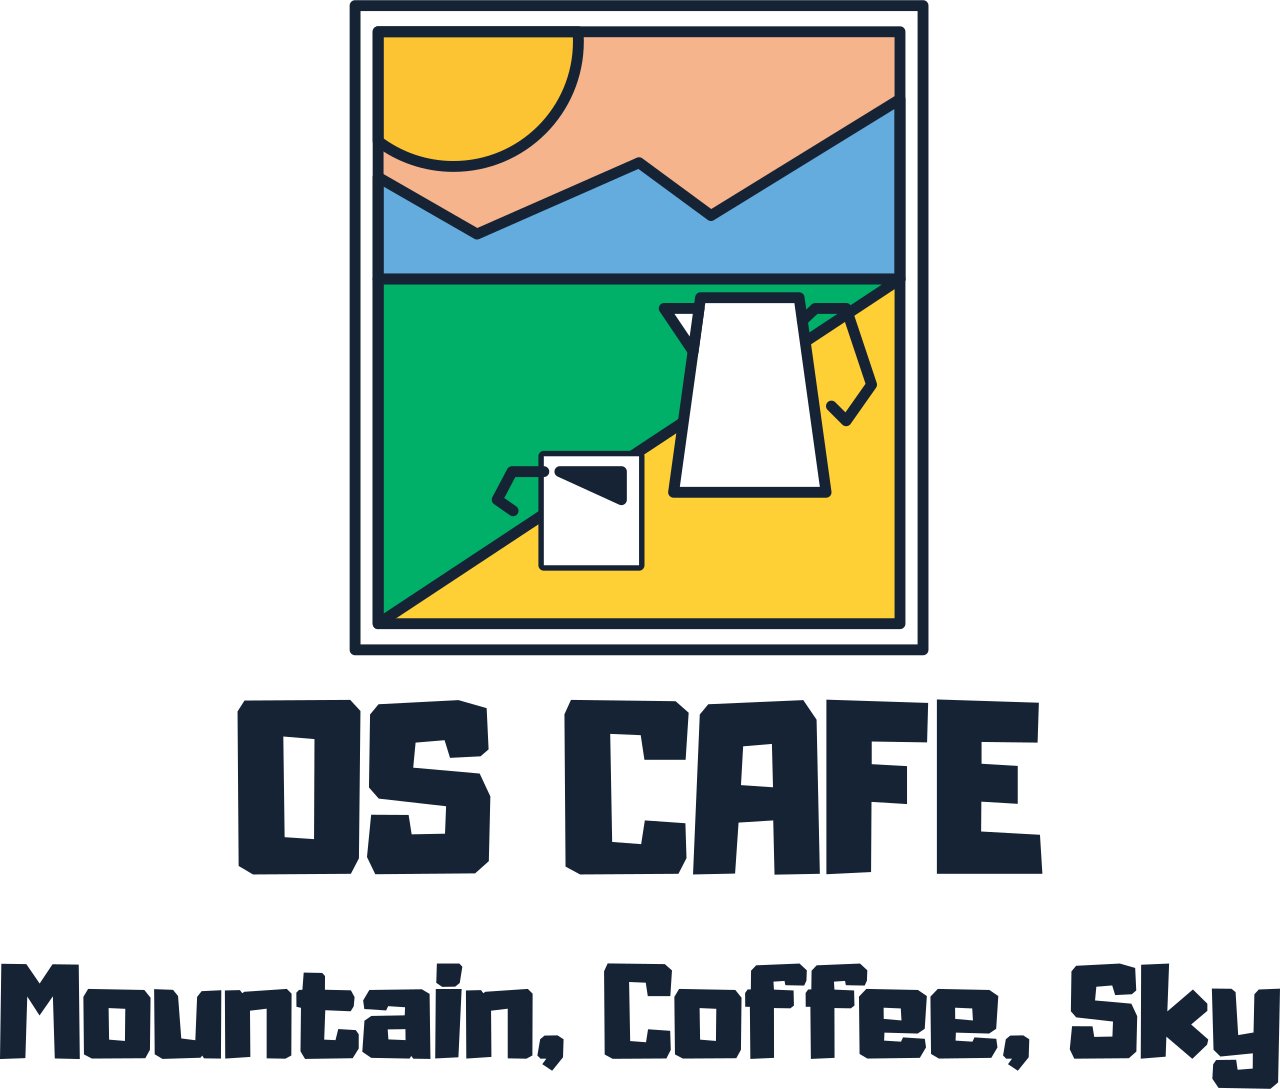 OS CAFE's logo